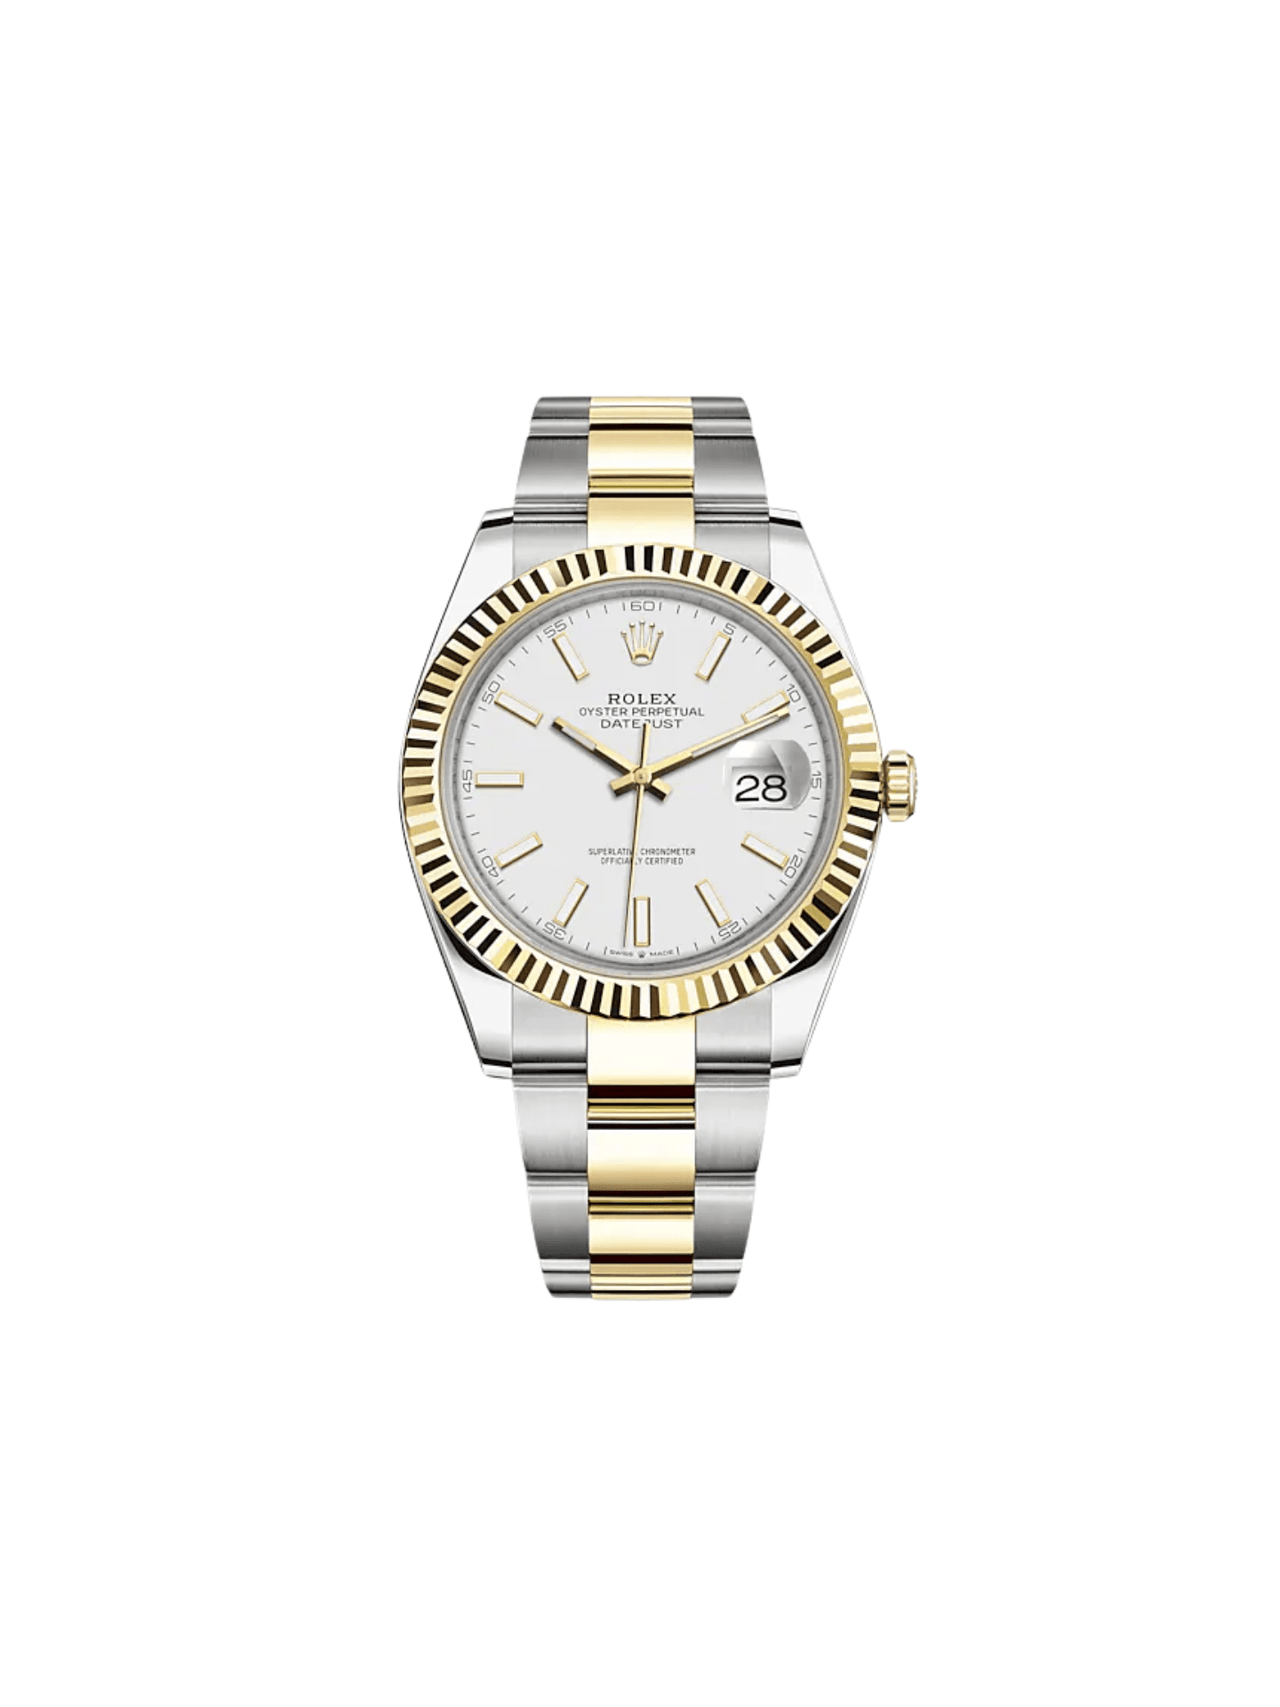 Luxury Watch Rolex Datejust 41 Yellow Gold & Stainless Steel White Dial 126333 Wrist Aficionado